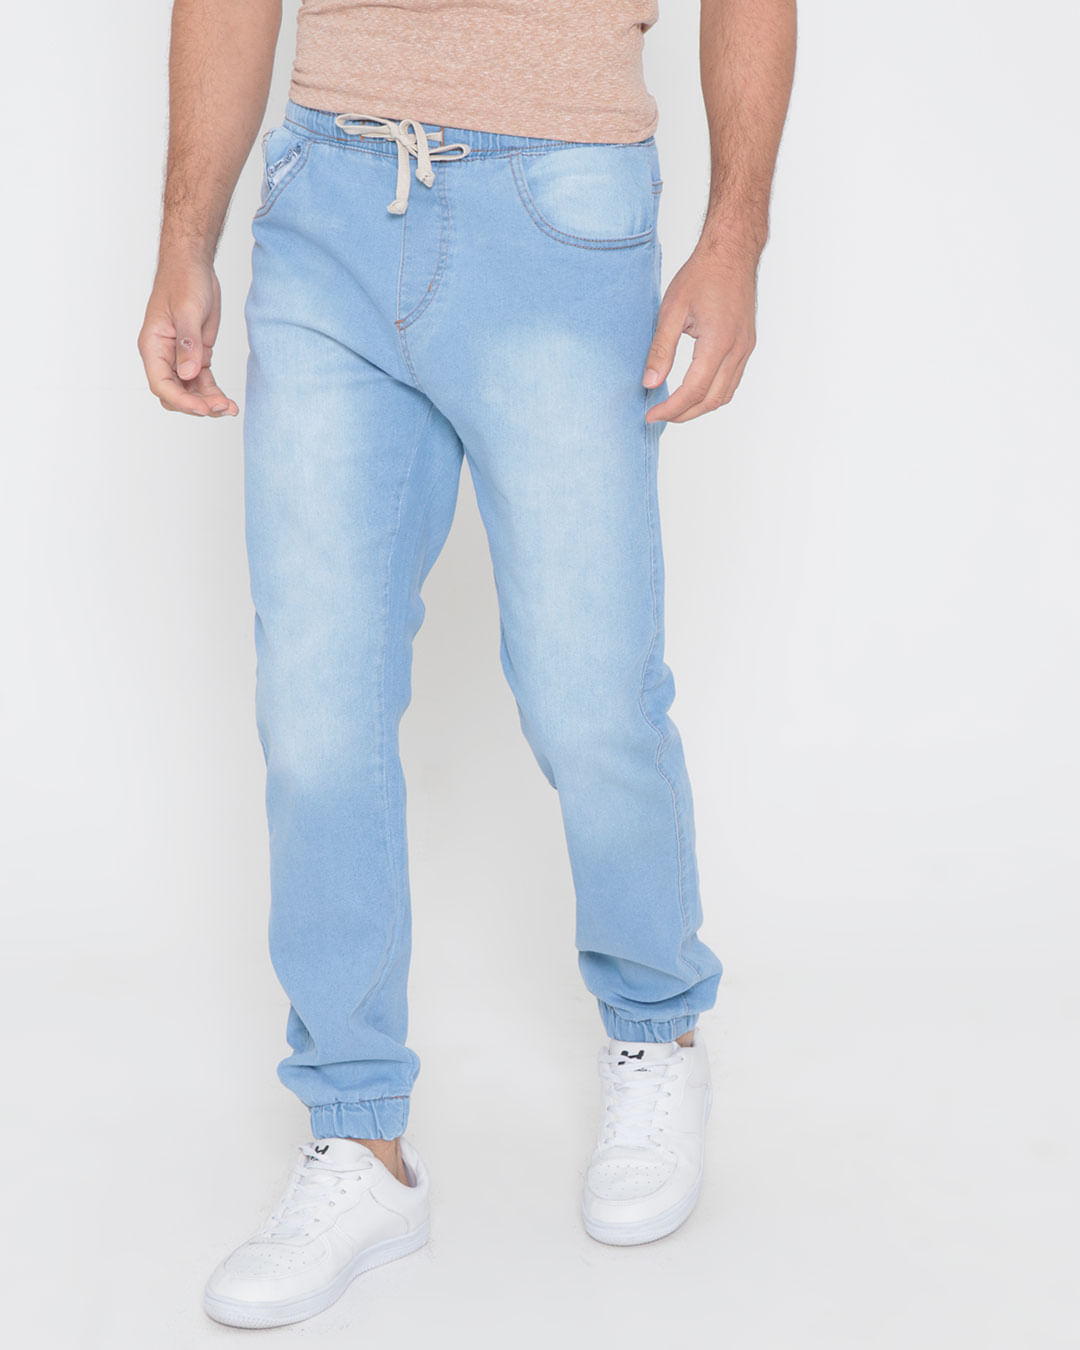 Calca-Jeans-Masculina-Jogger-Azul-Claro